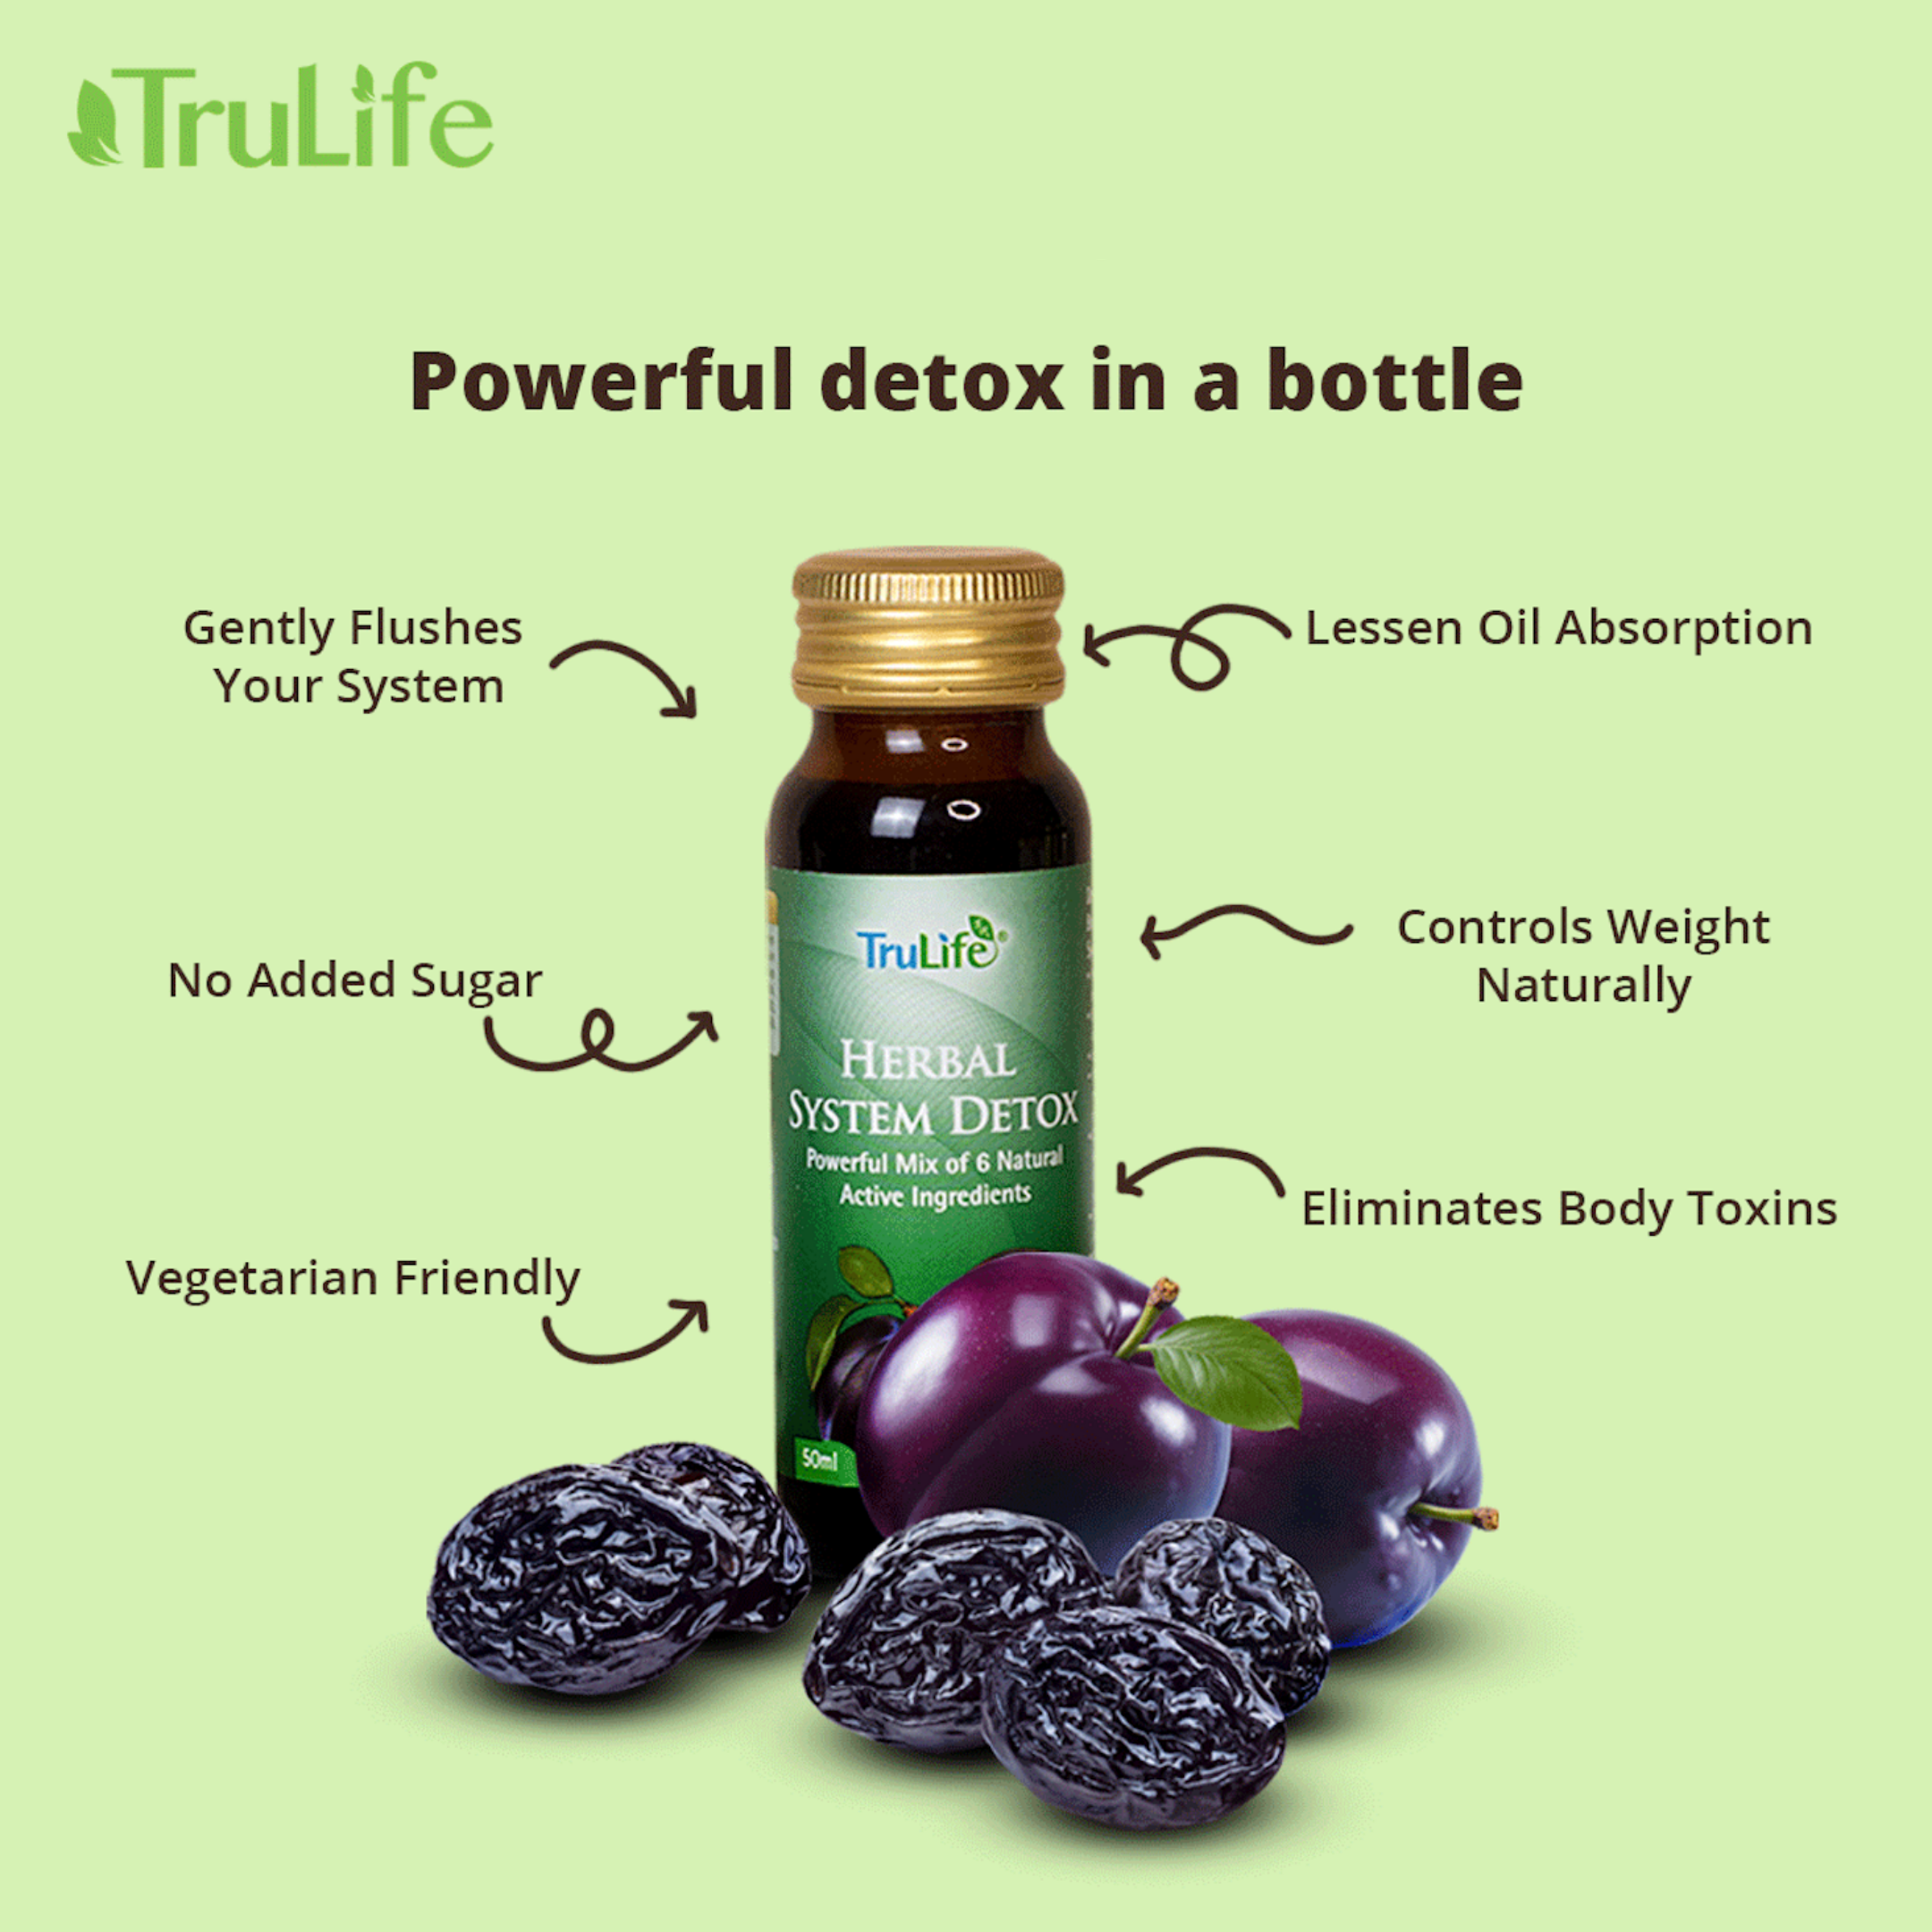 TruLife Herbal System Detox Benefits